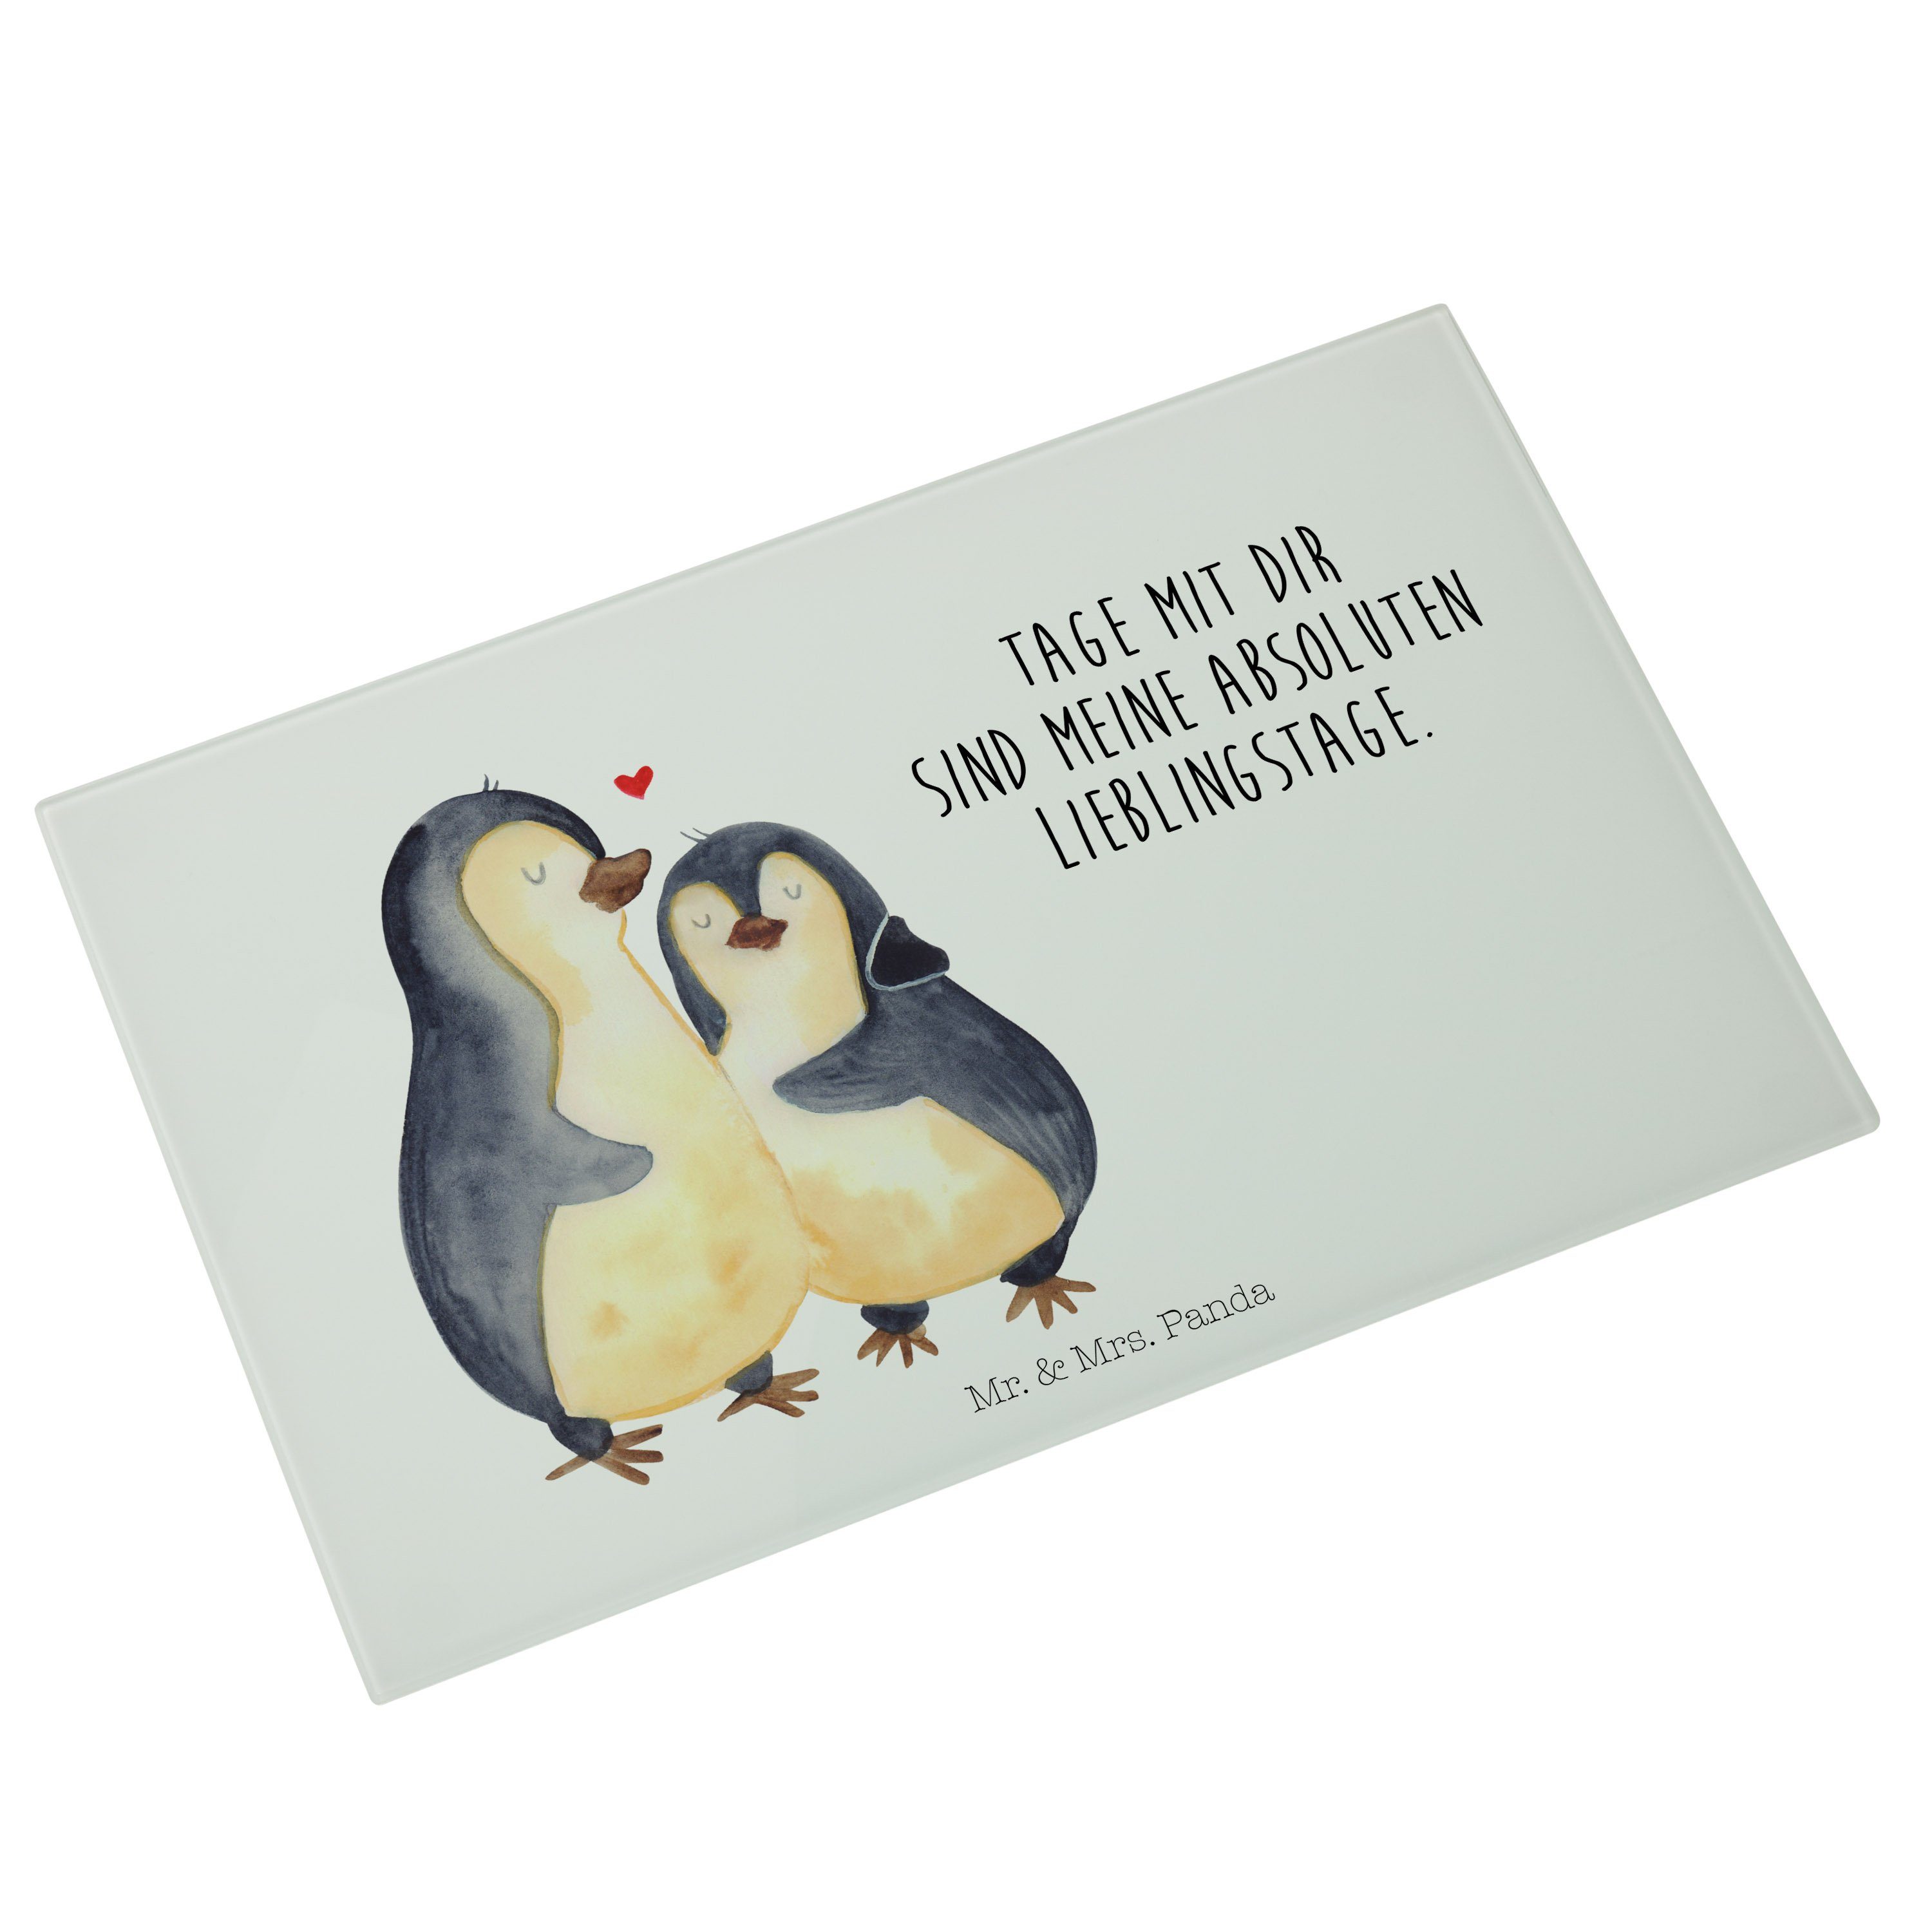 Mr. & Mrs. Panda Tasse Pinguin Buch - Weiß - Geschenk, Urlaub, ausruhen,  Faulenzen, Keramikt, Keramik, Farbecht